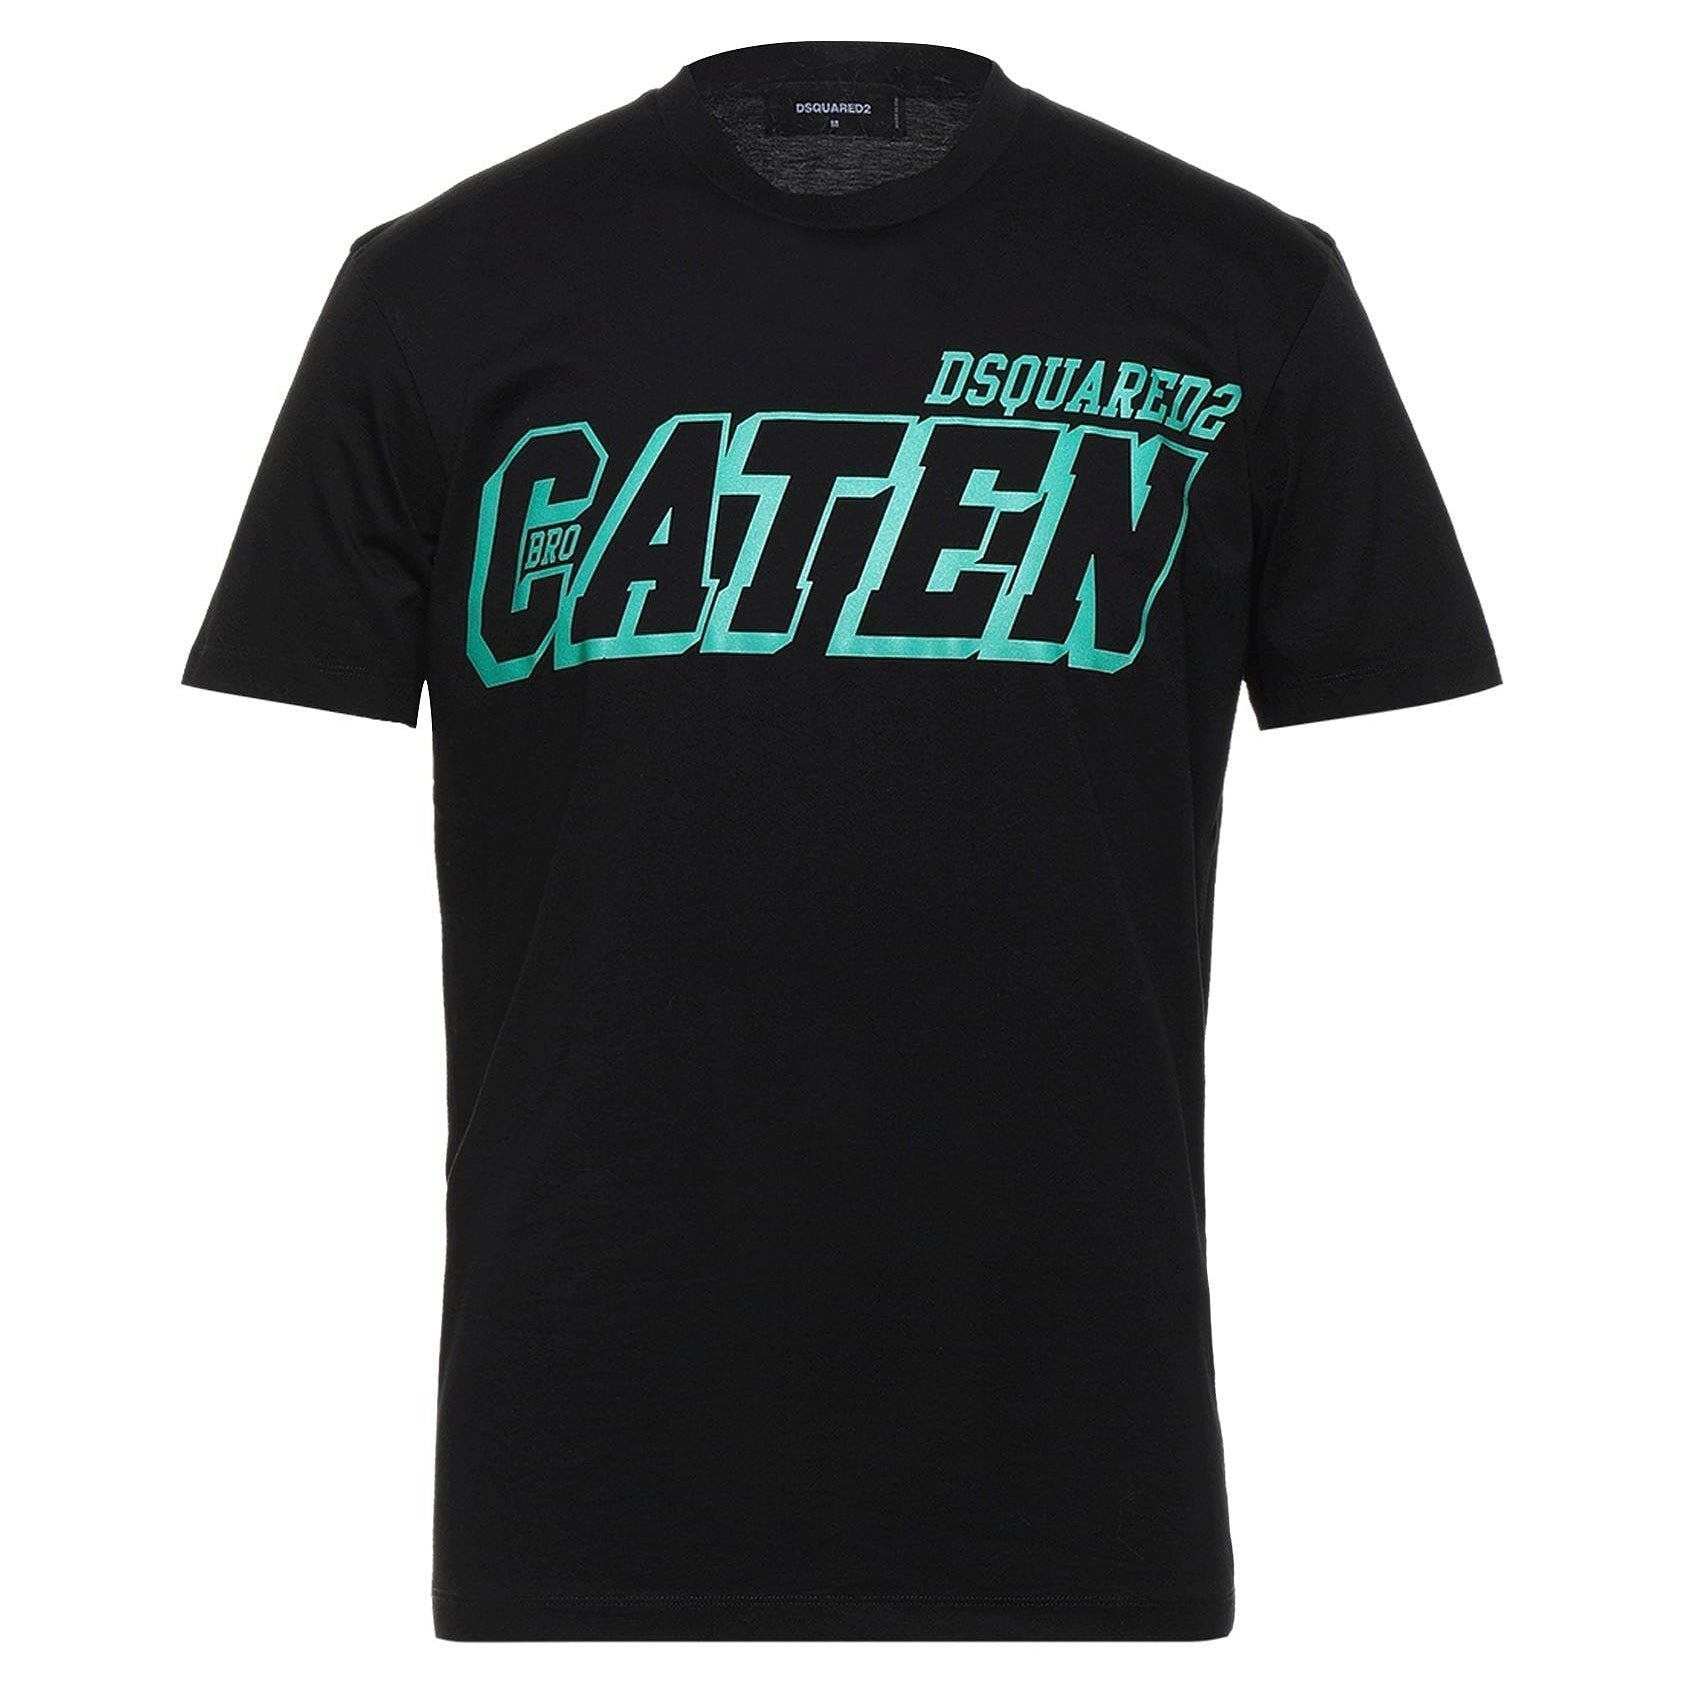 DSquared2 'Caten' T-shirt Black - Boinclo ltd